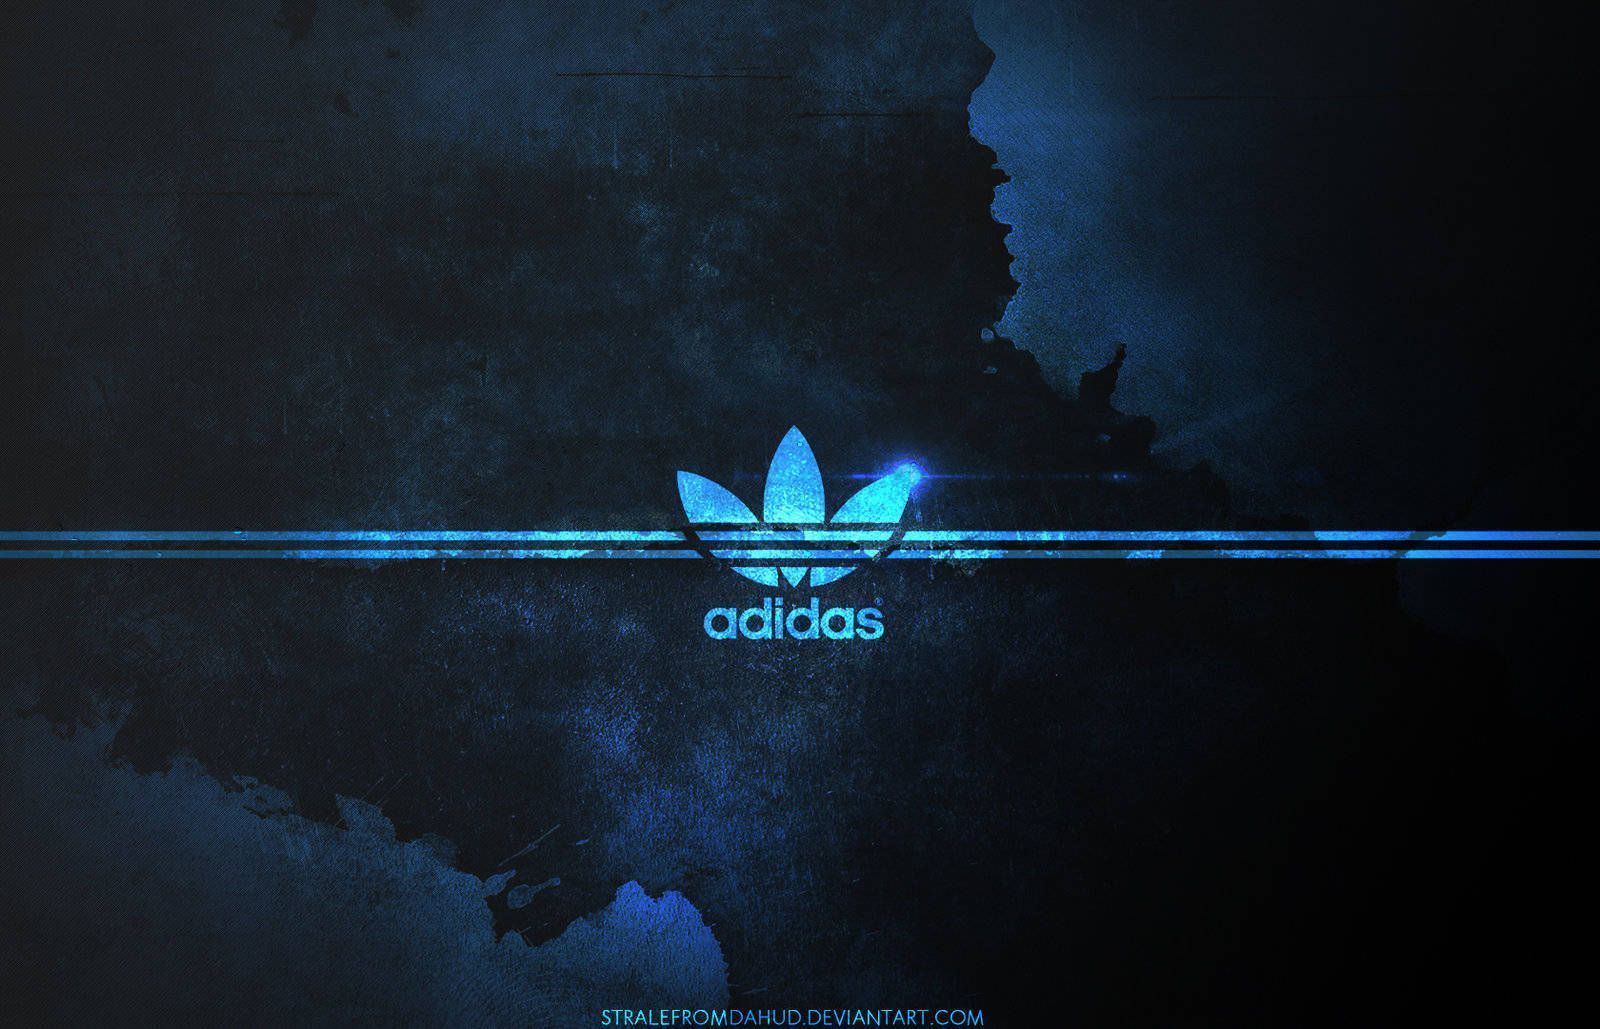 Adidas Logo Wallpapers Top Free Adidas Logo Backgrounds Wallpaperaccess - Adidas